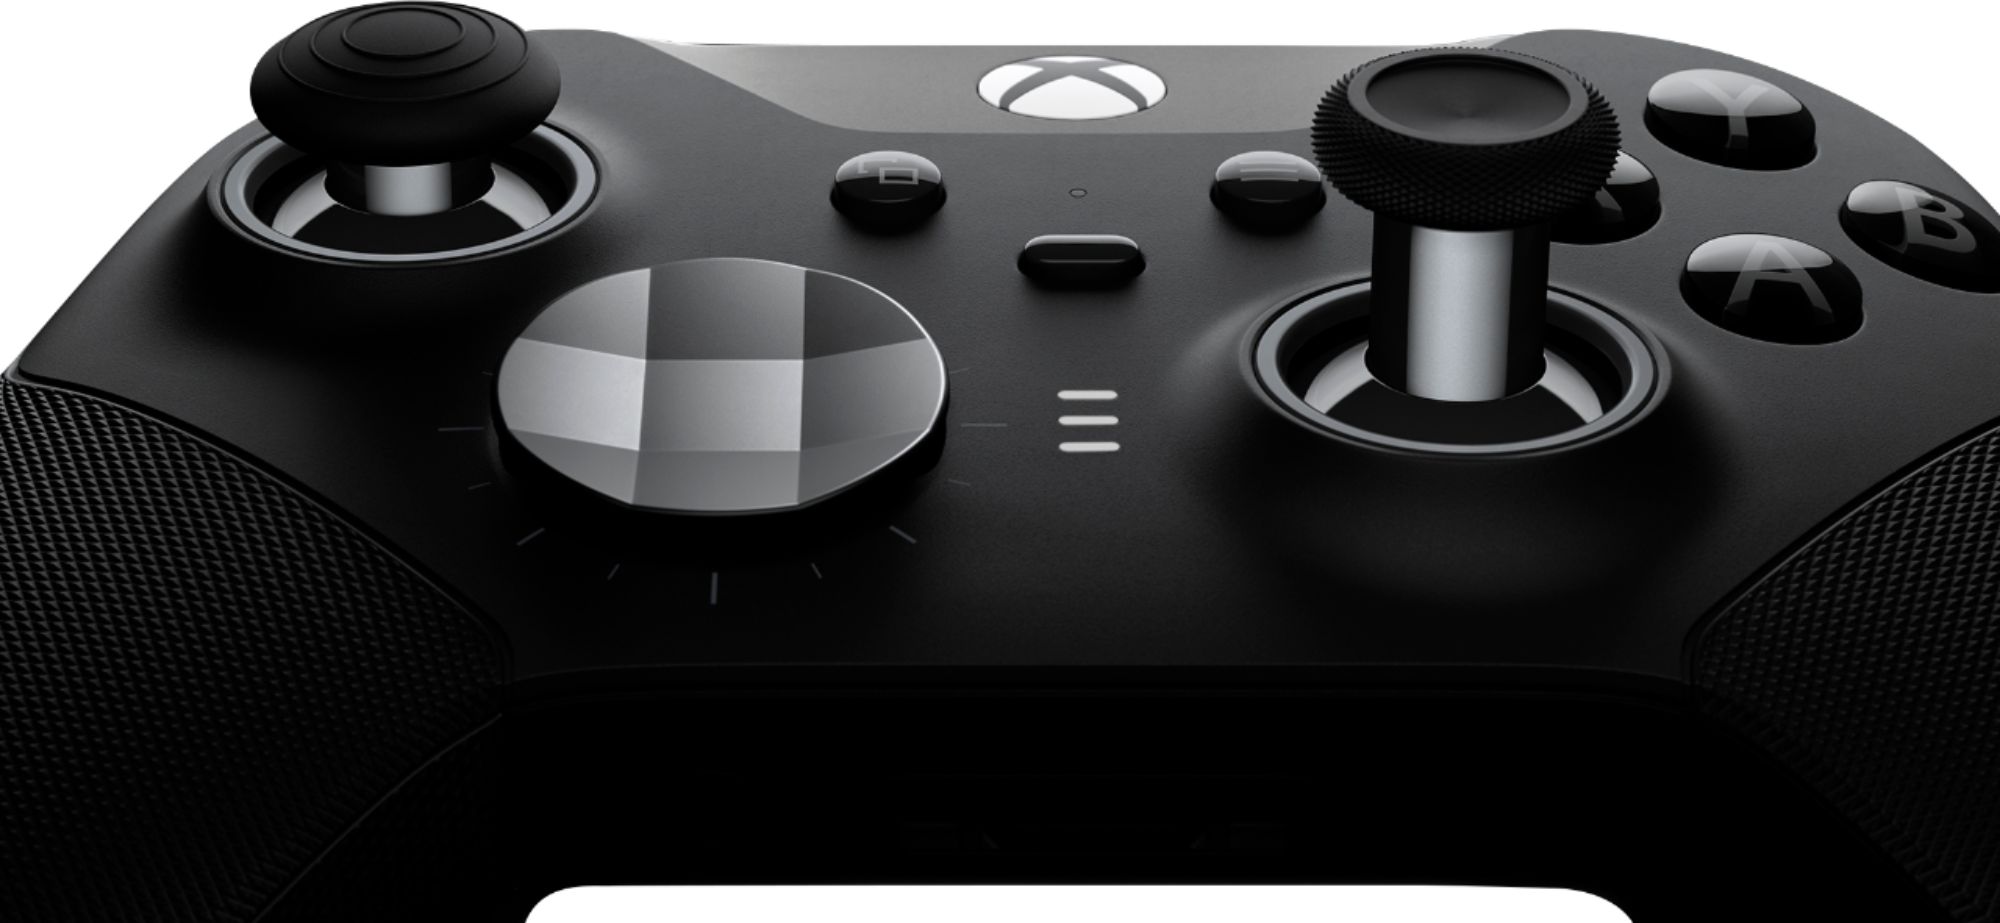 Microsoft Geek Squad Certified Refurbished Xbox Elite Wireless